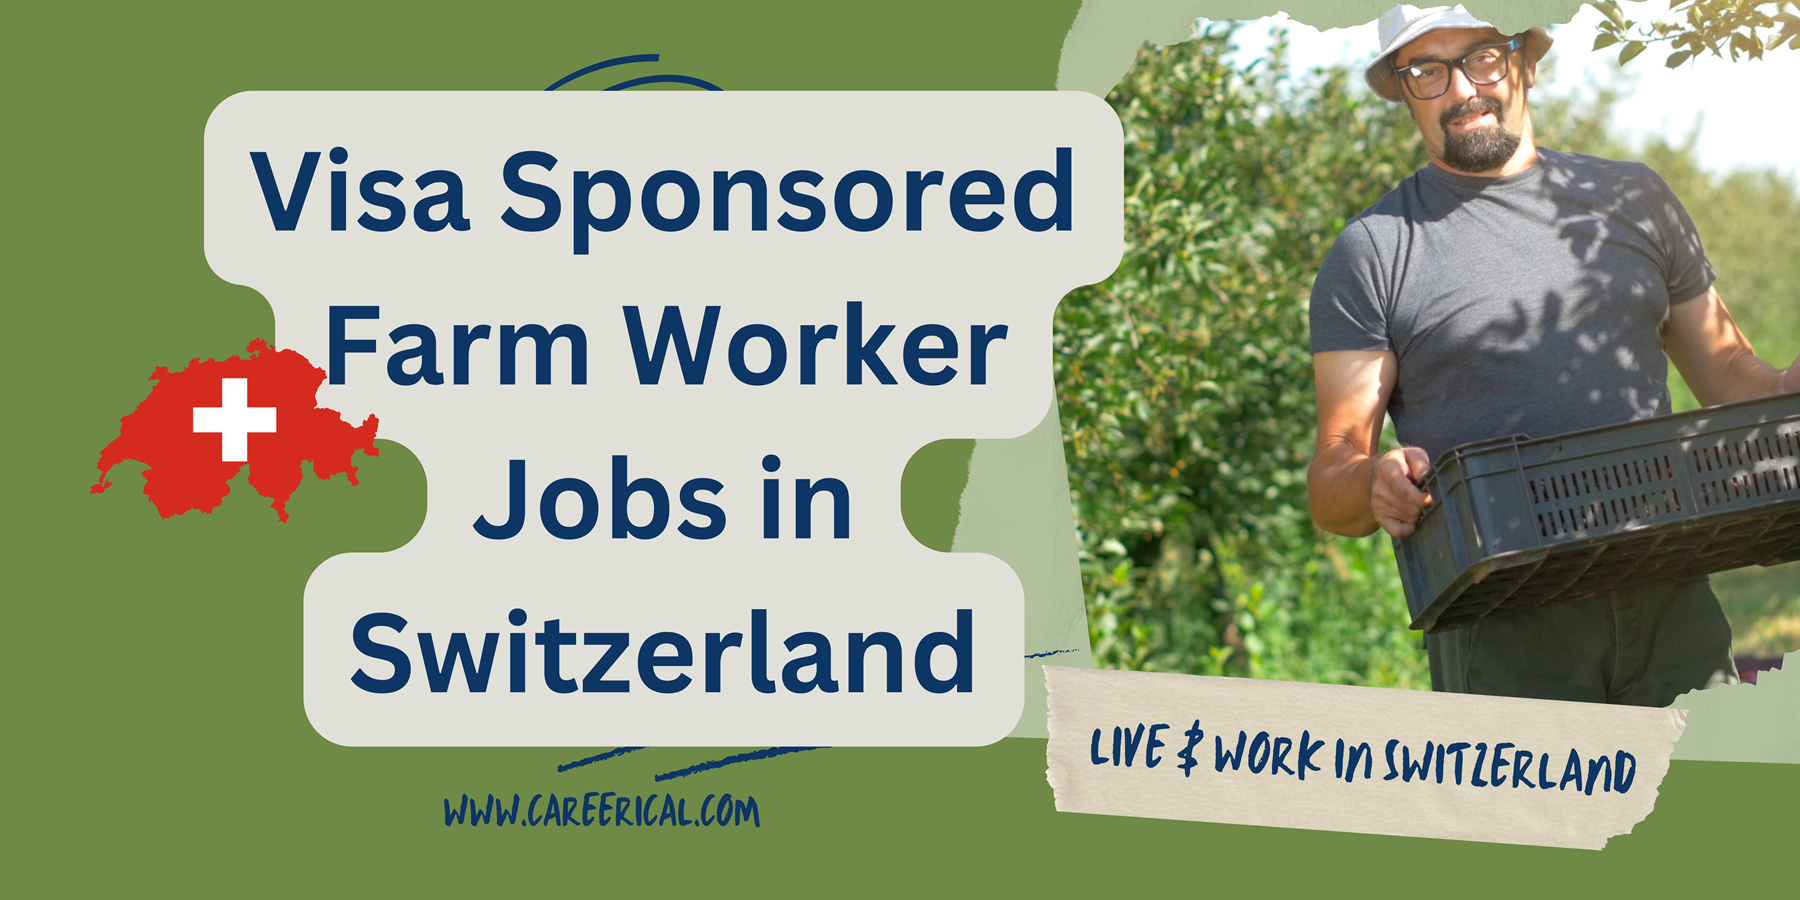 Visa Sponsored Farm Worker Jobs in Switzerland